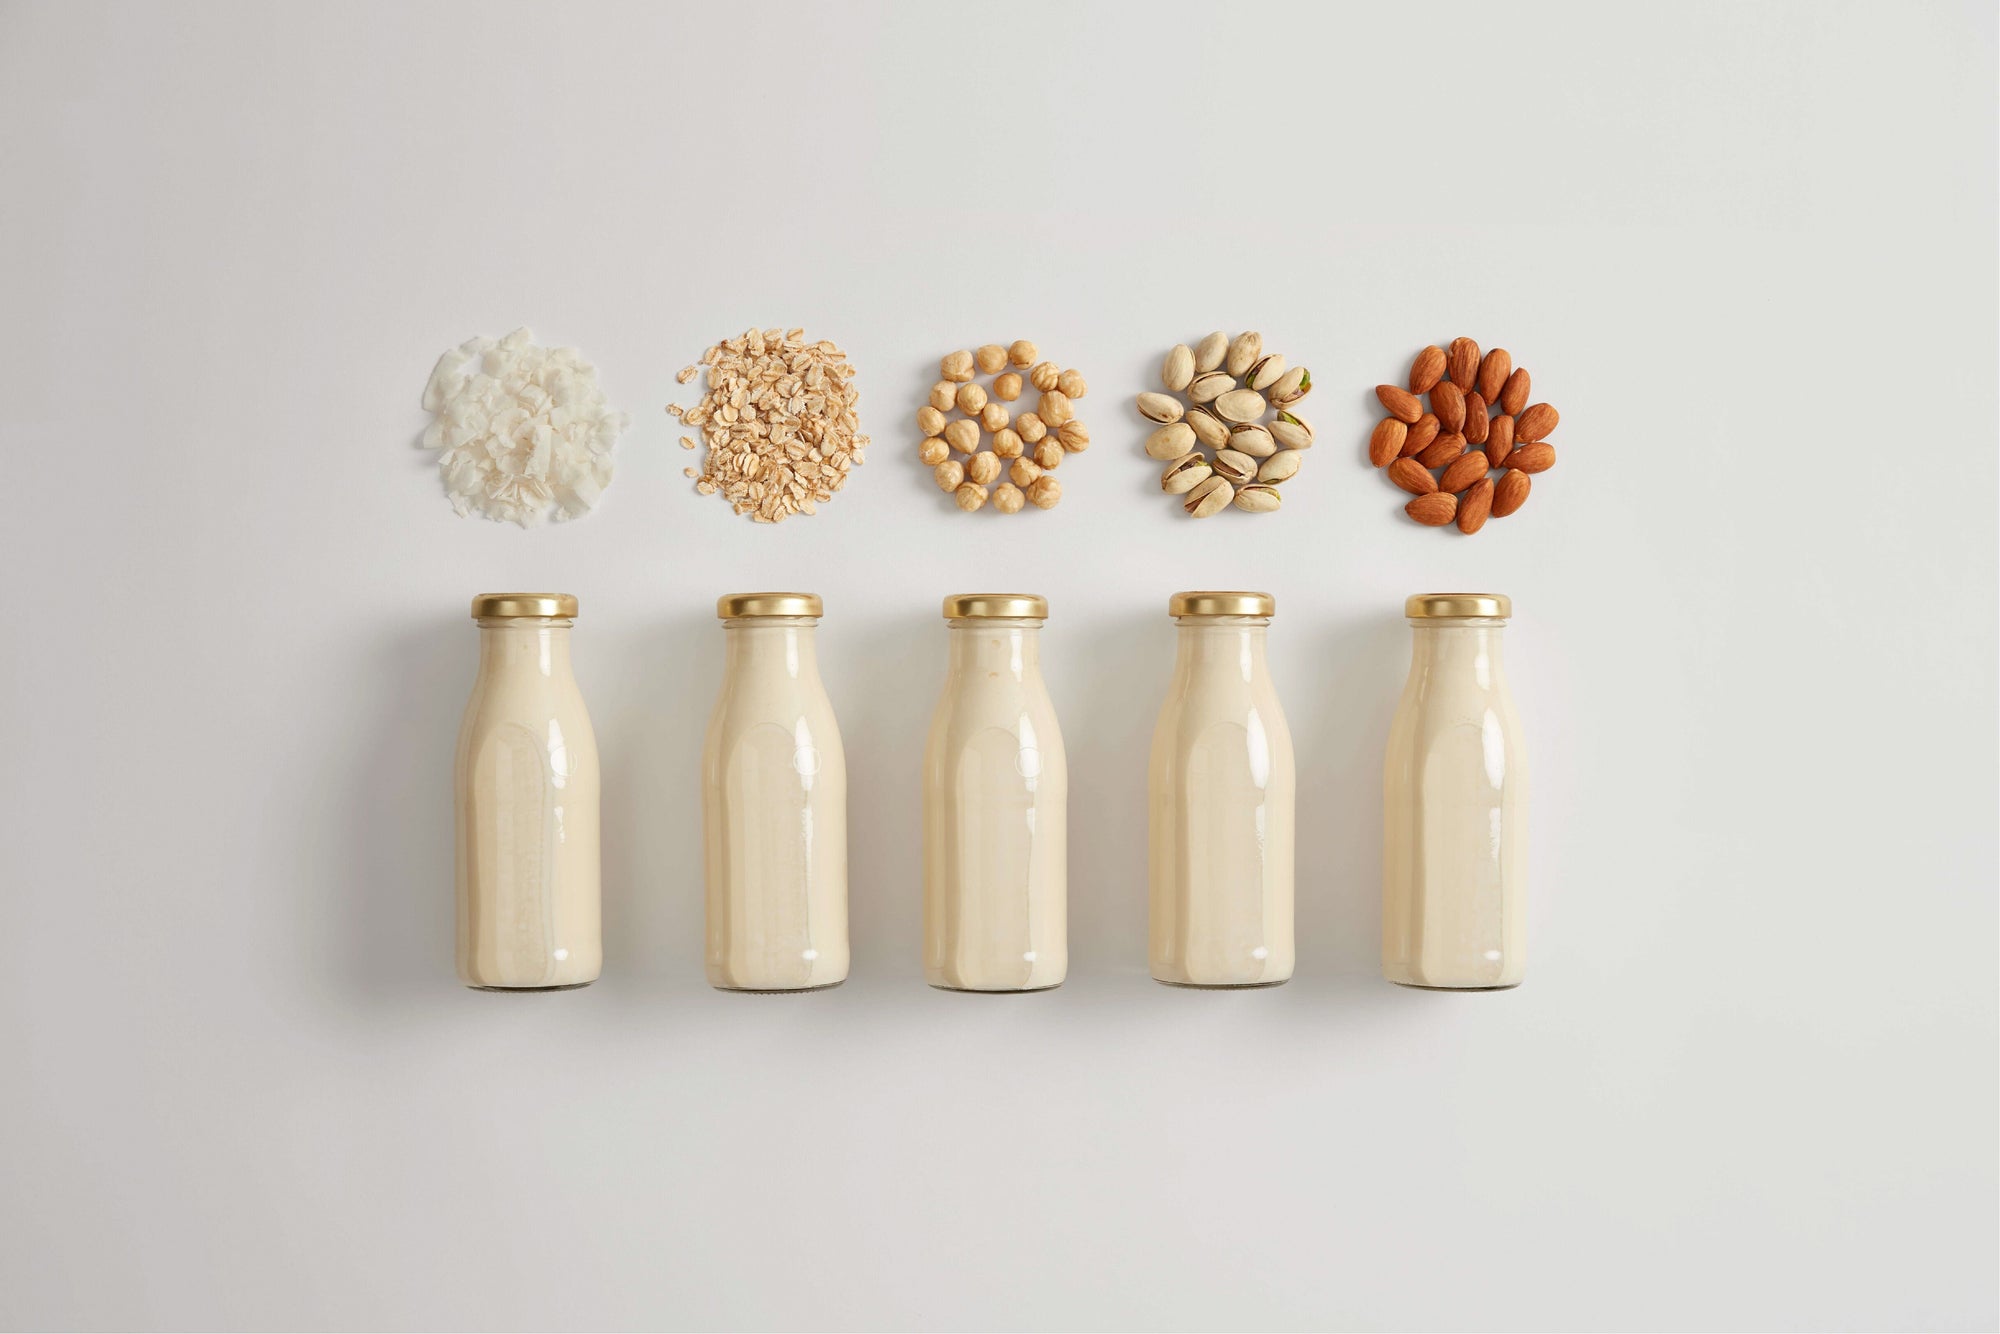 Vegan milk powder substitutes represented by five plant milk bottles